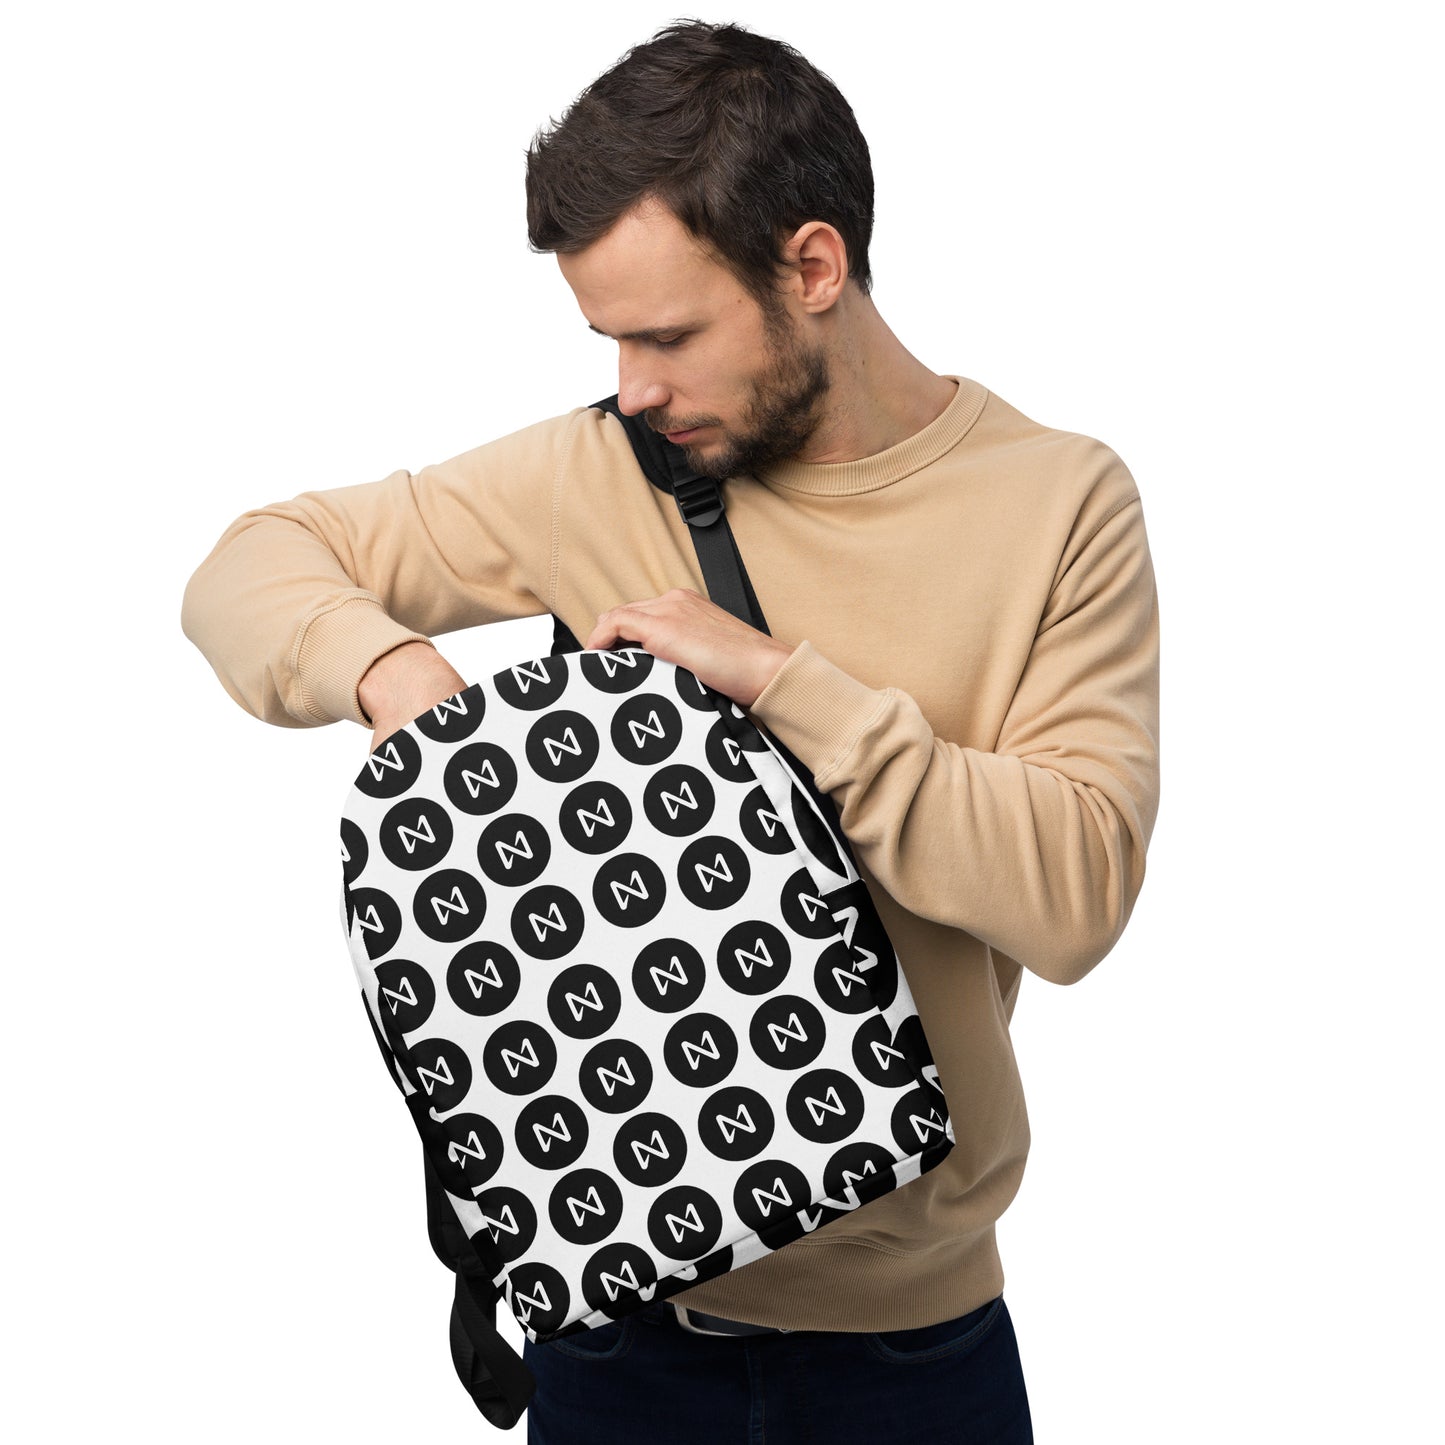 NEAR CIRCLE ALLOVER PRINT PATTERN Minimalist Backpack